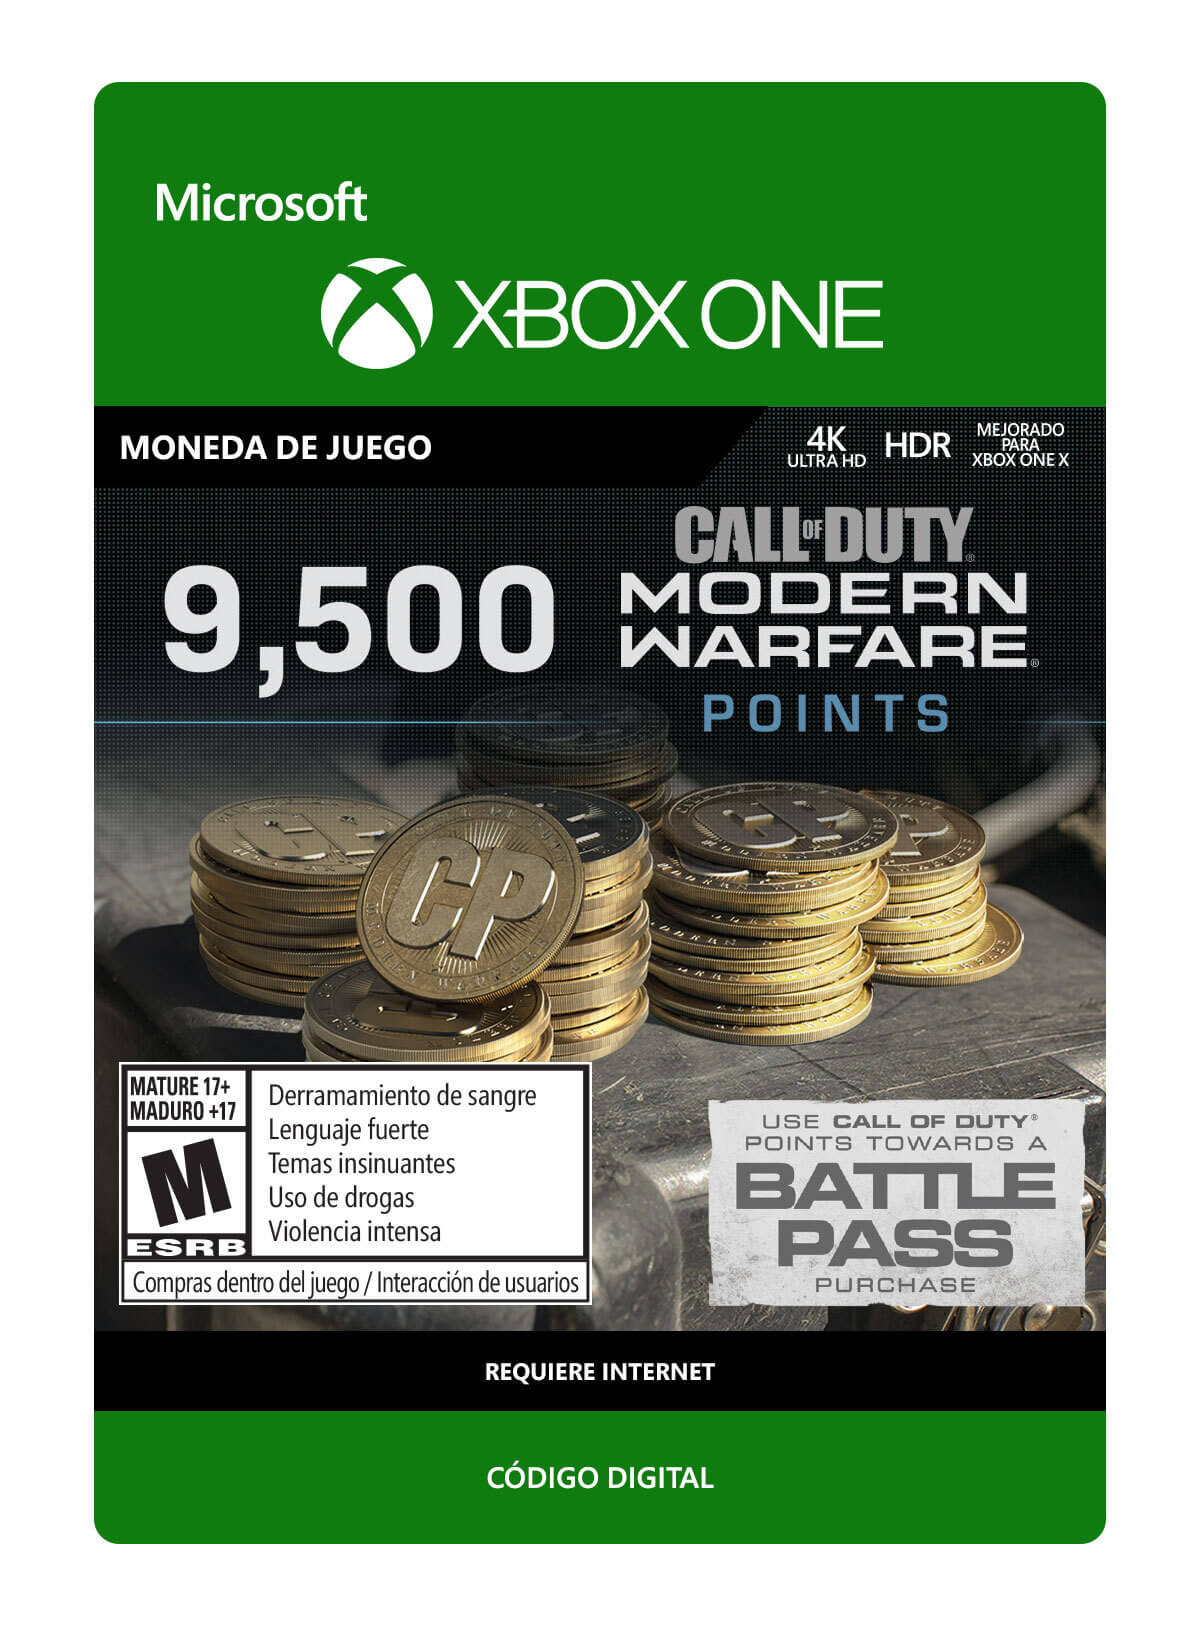 XBOX -ONE - Call of Duty: Modern Warfare Points - 9500 - Moneda de juego - Best Buy